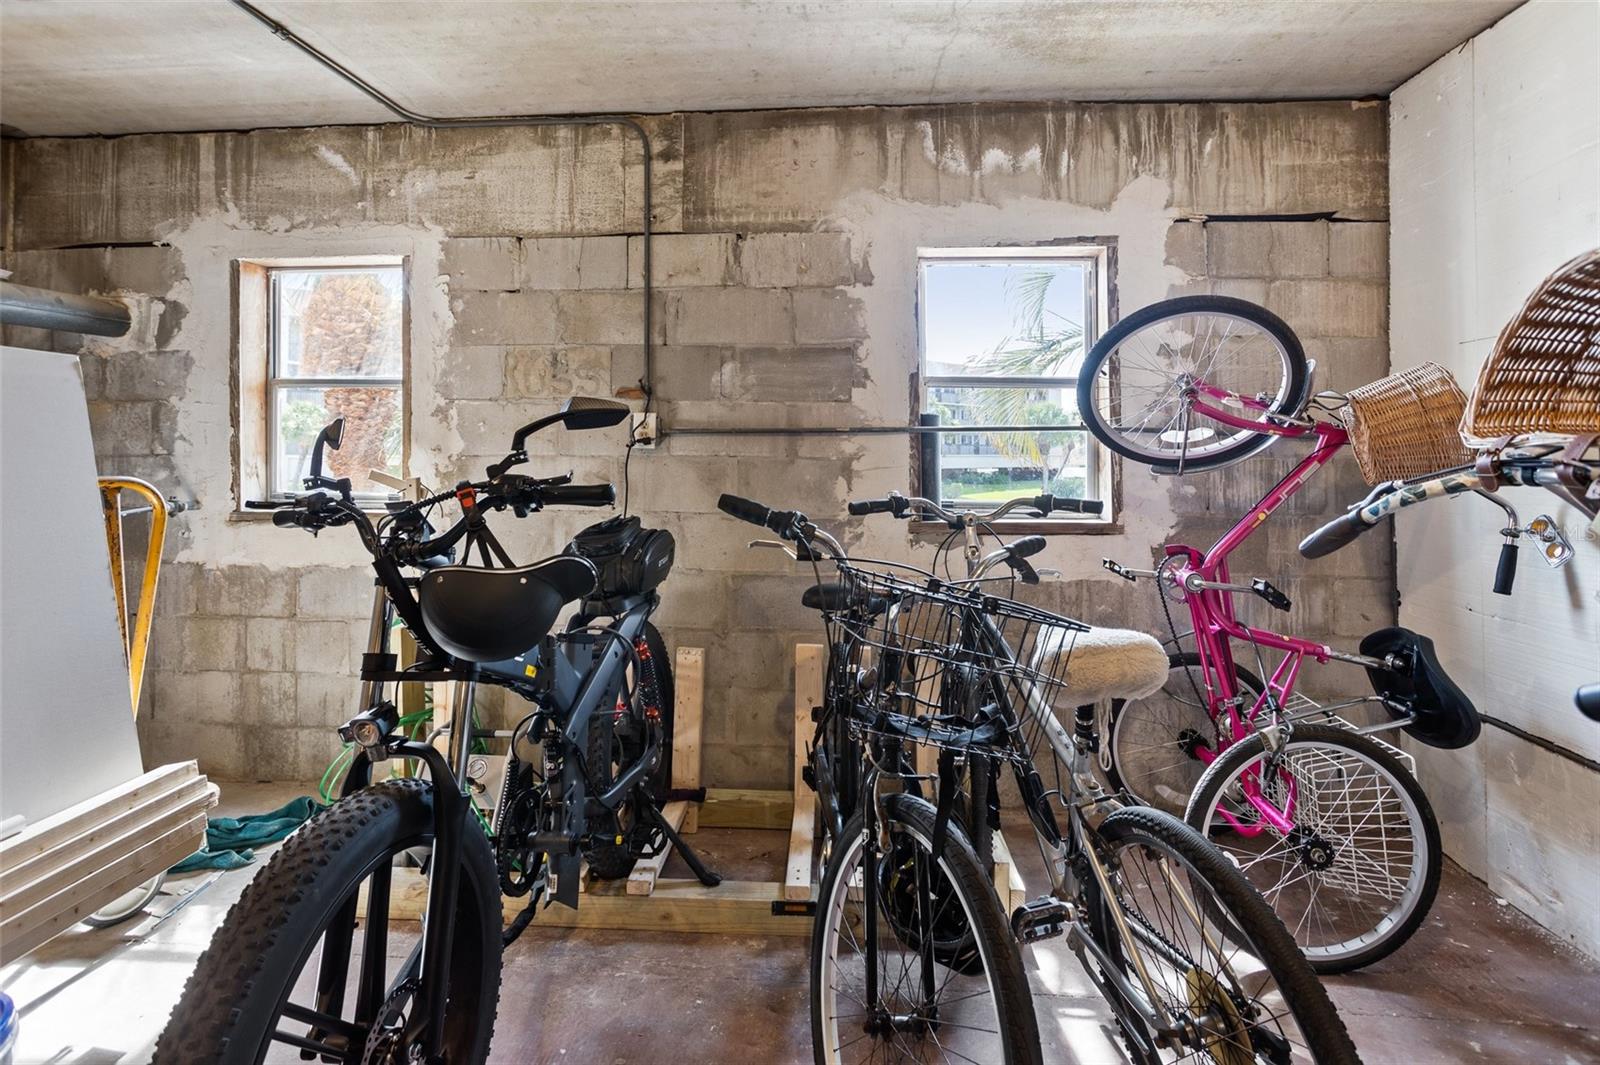 Bike storage room; plugs for electric bikes